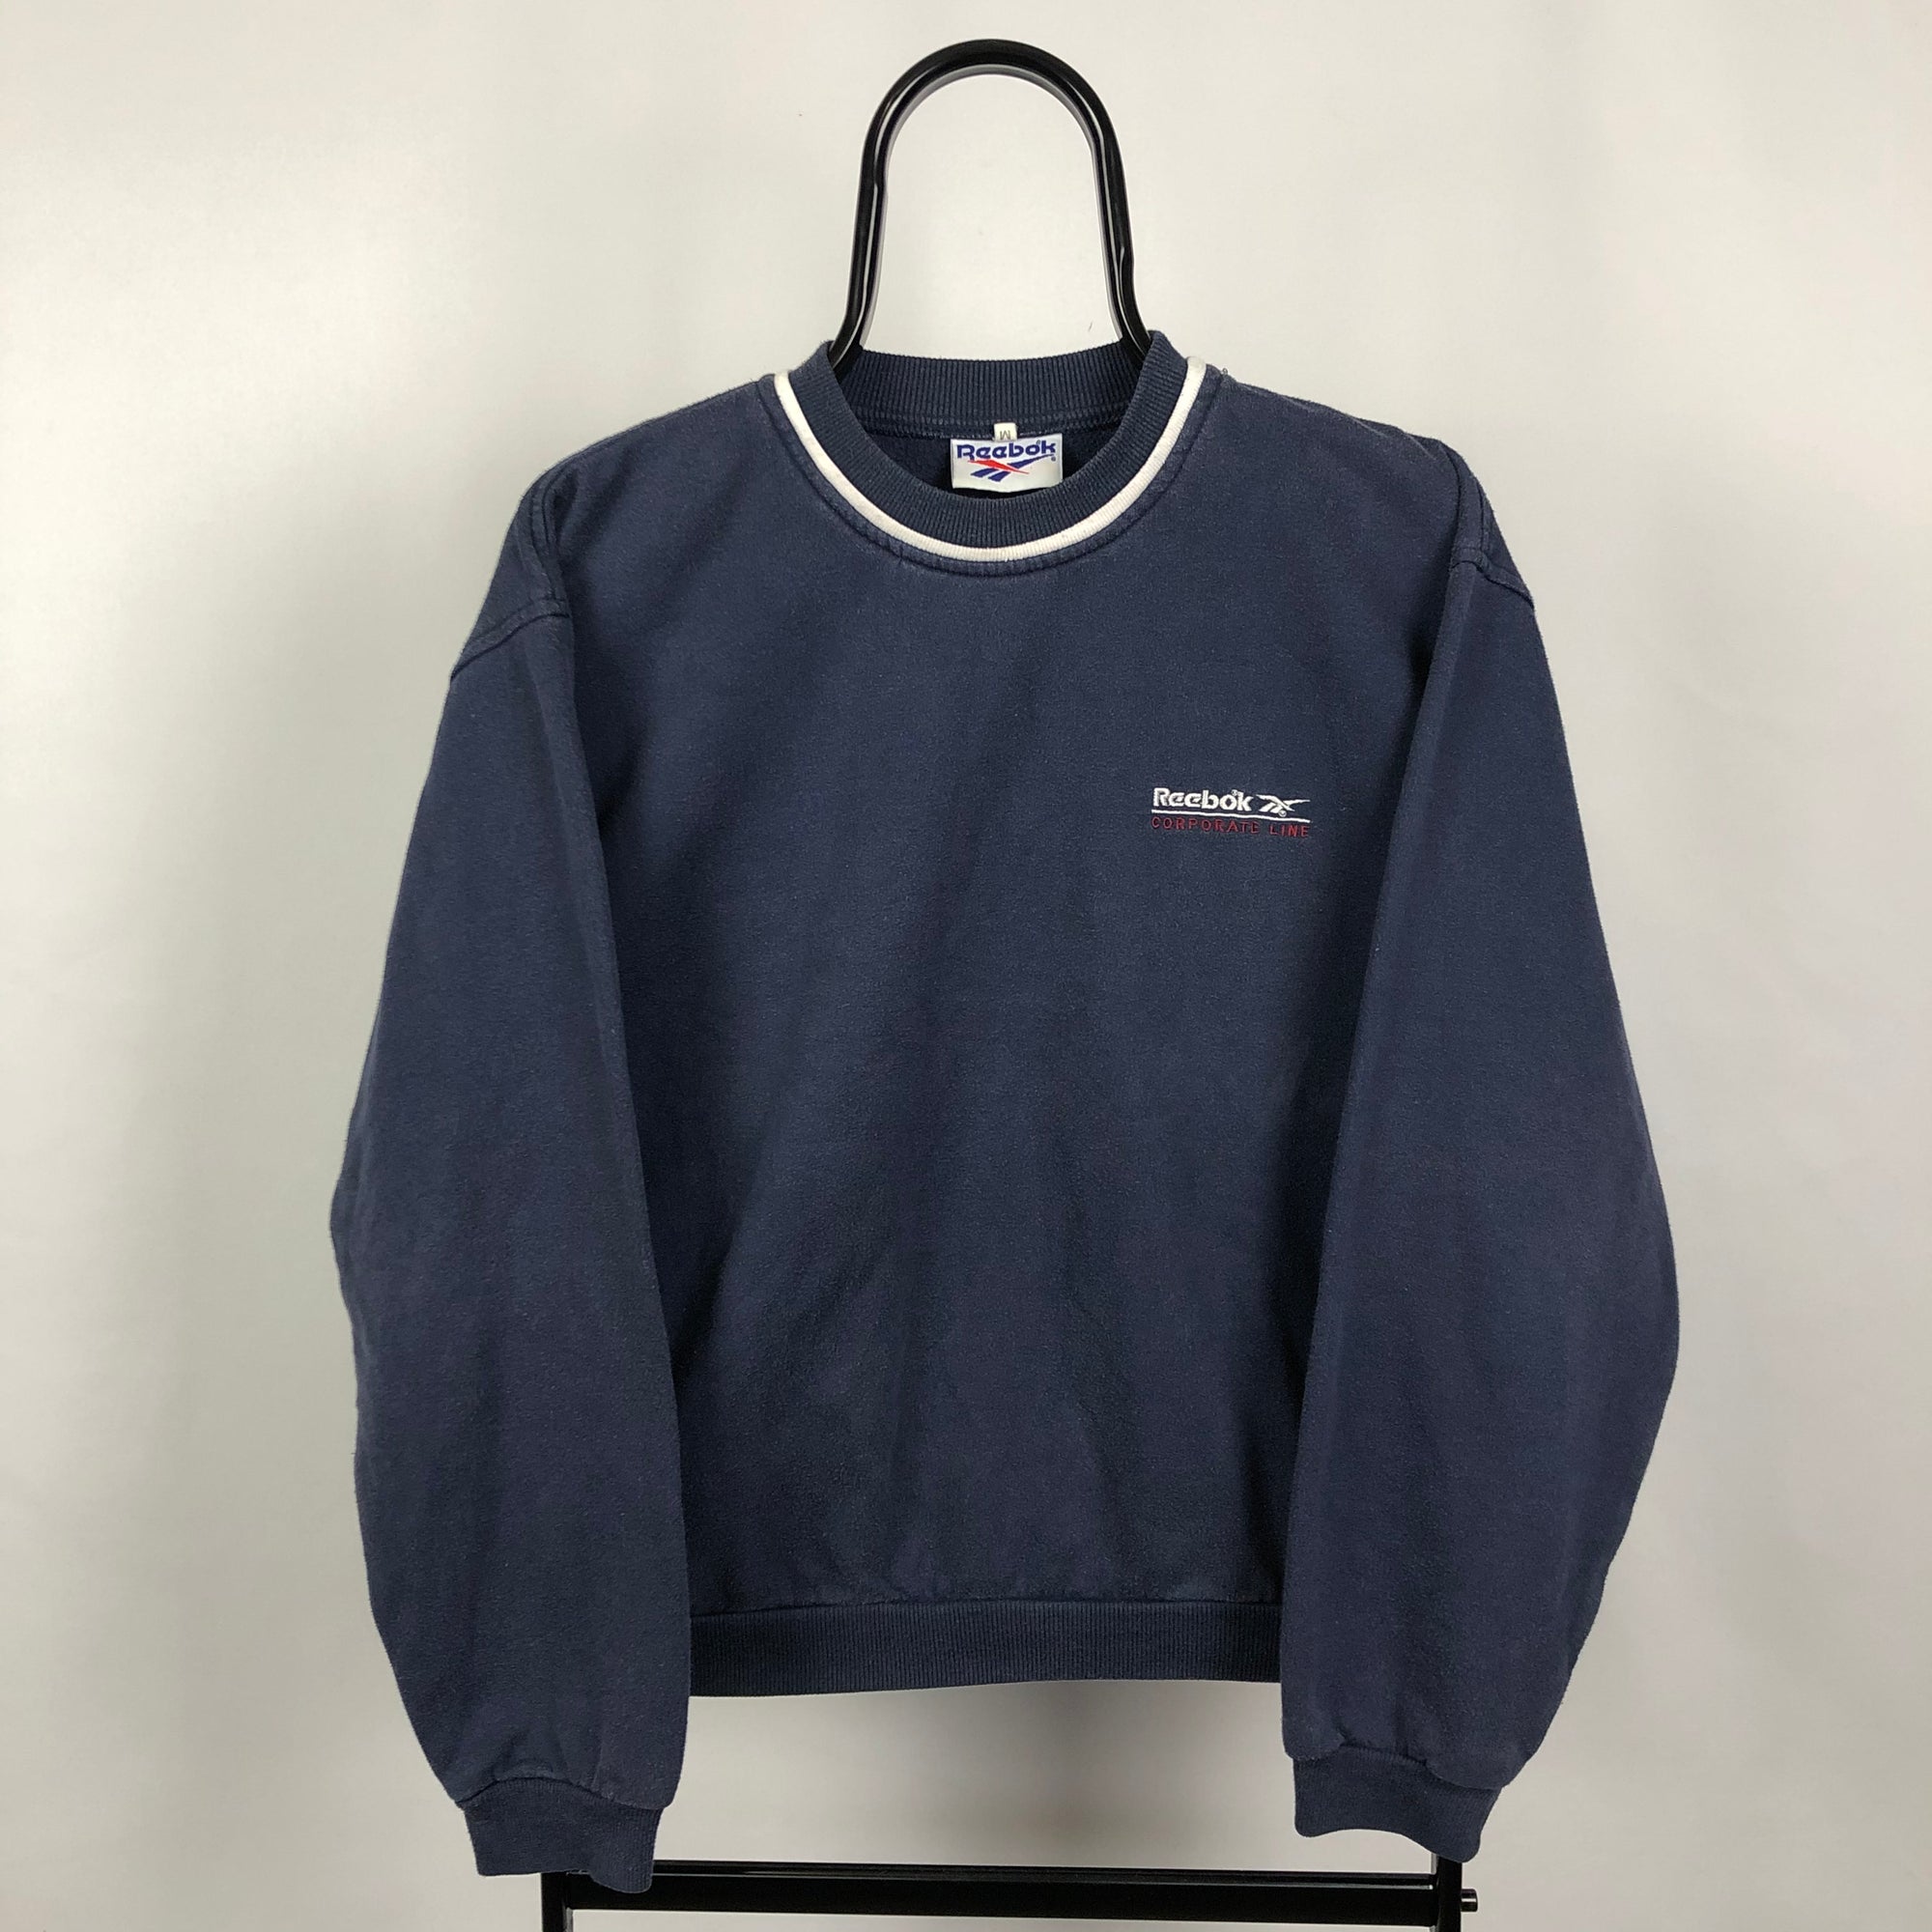 Vintage Reebok Corporate Line Sweatshirt - Men's Small/Women's Medium